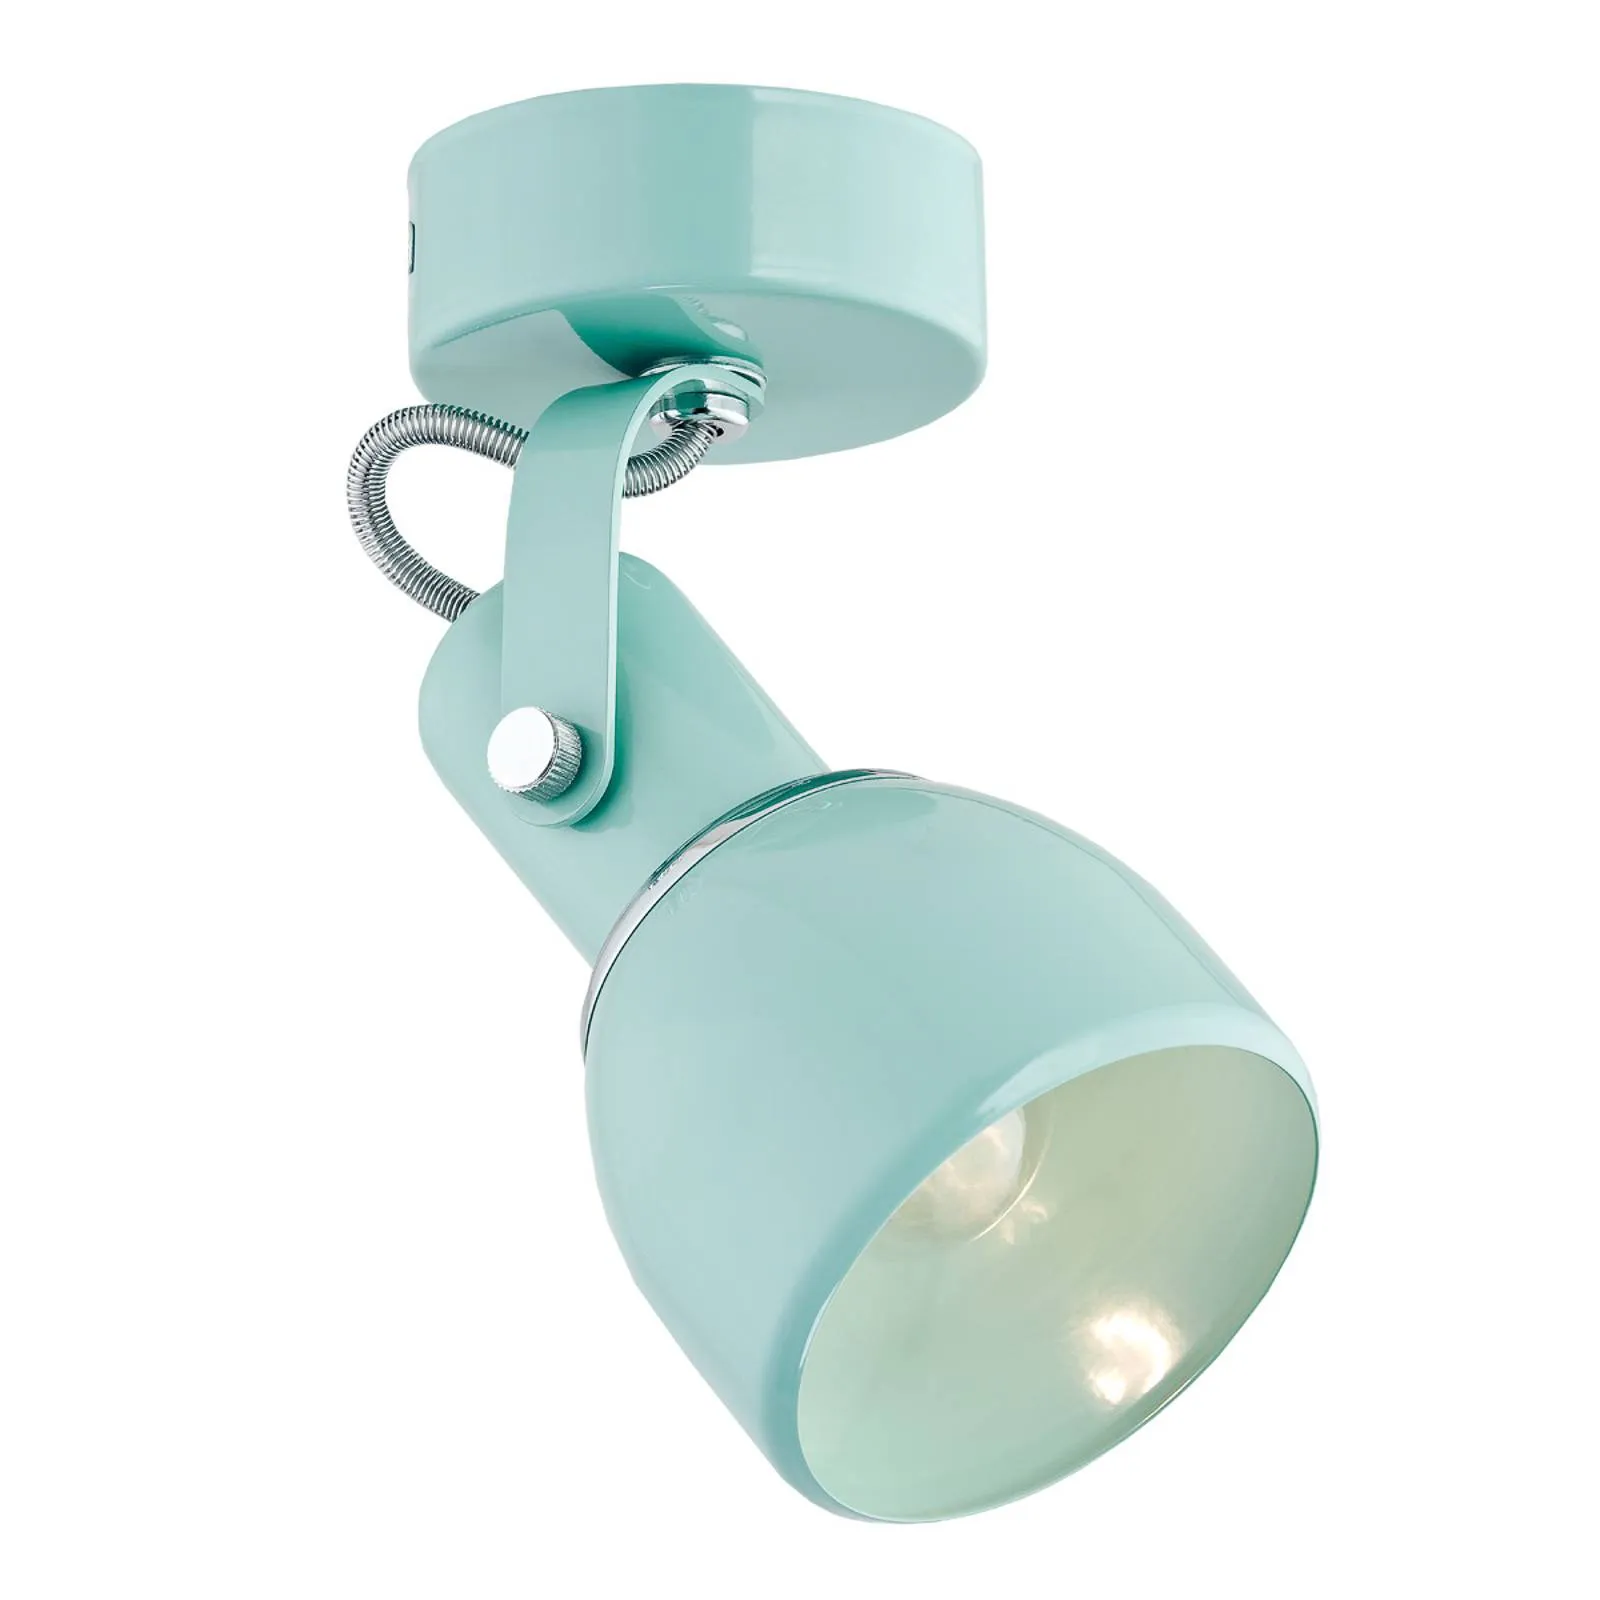 Fiord ceiling spotlight, one-bulb, mint green